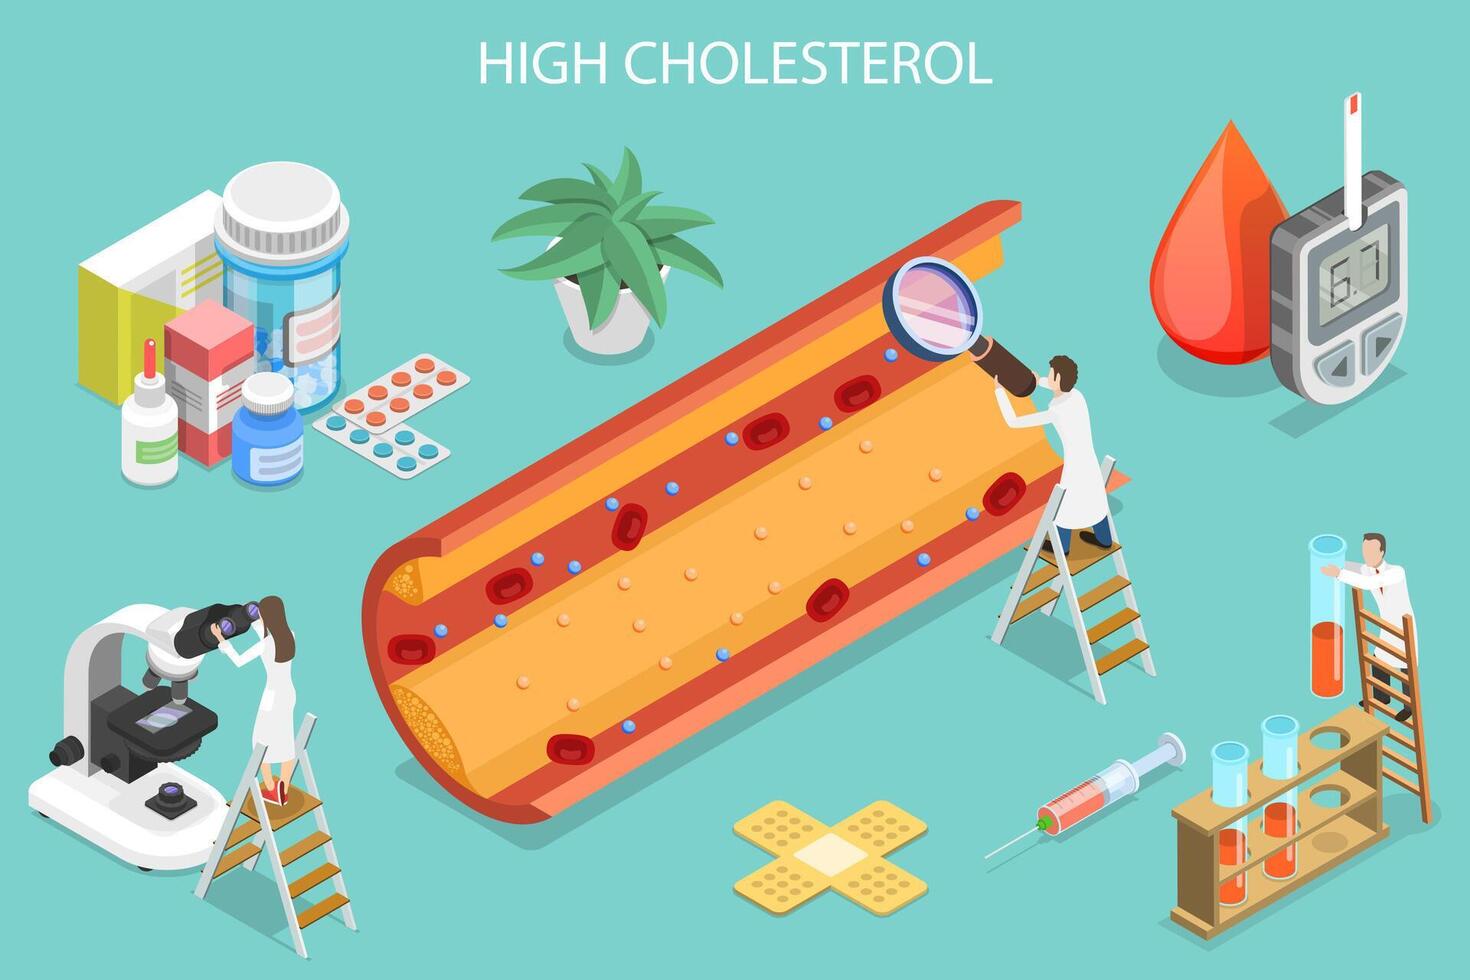 3D Isometric Flat Vector Conceptual Illustration of High Cholesterol Level.